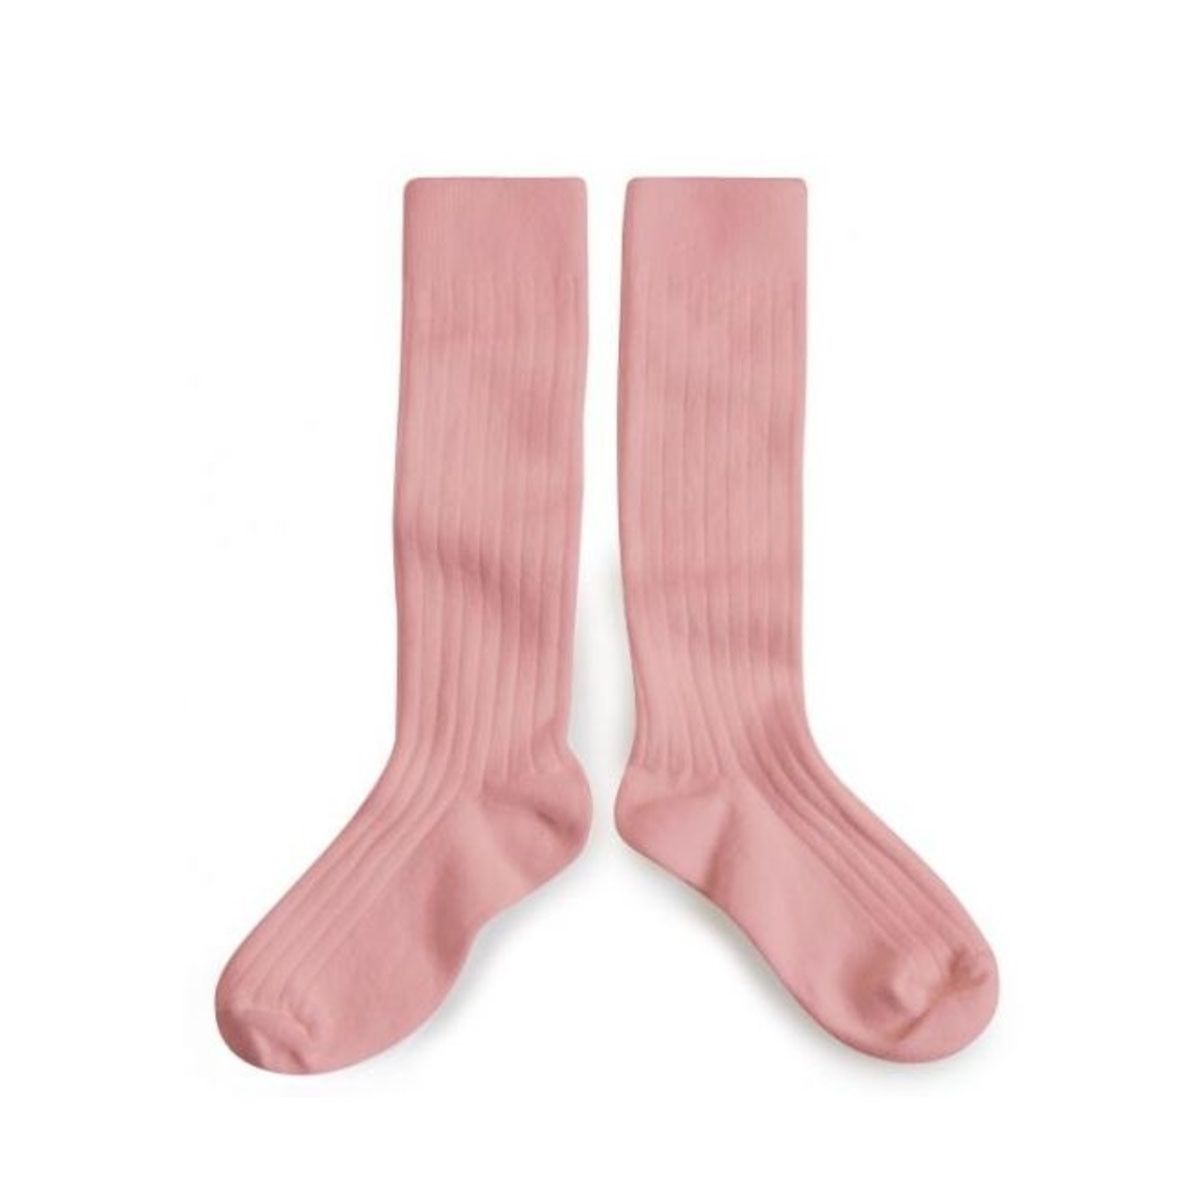 Collégien - Knee high socks La Haute rose quartz - Tights & socks - 2950 589 La Haute 